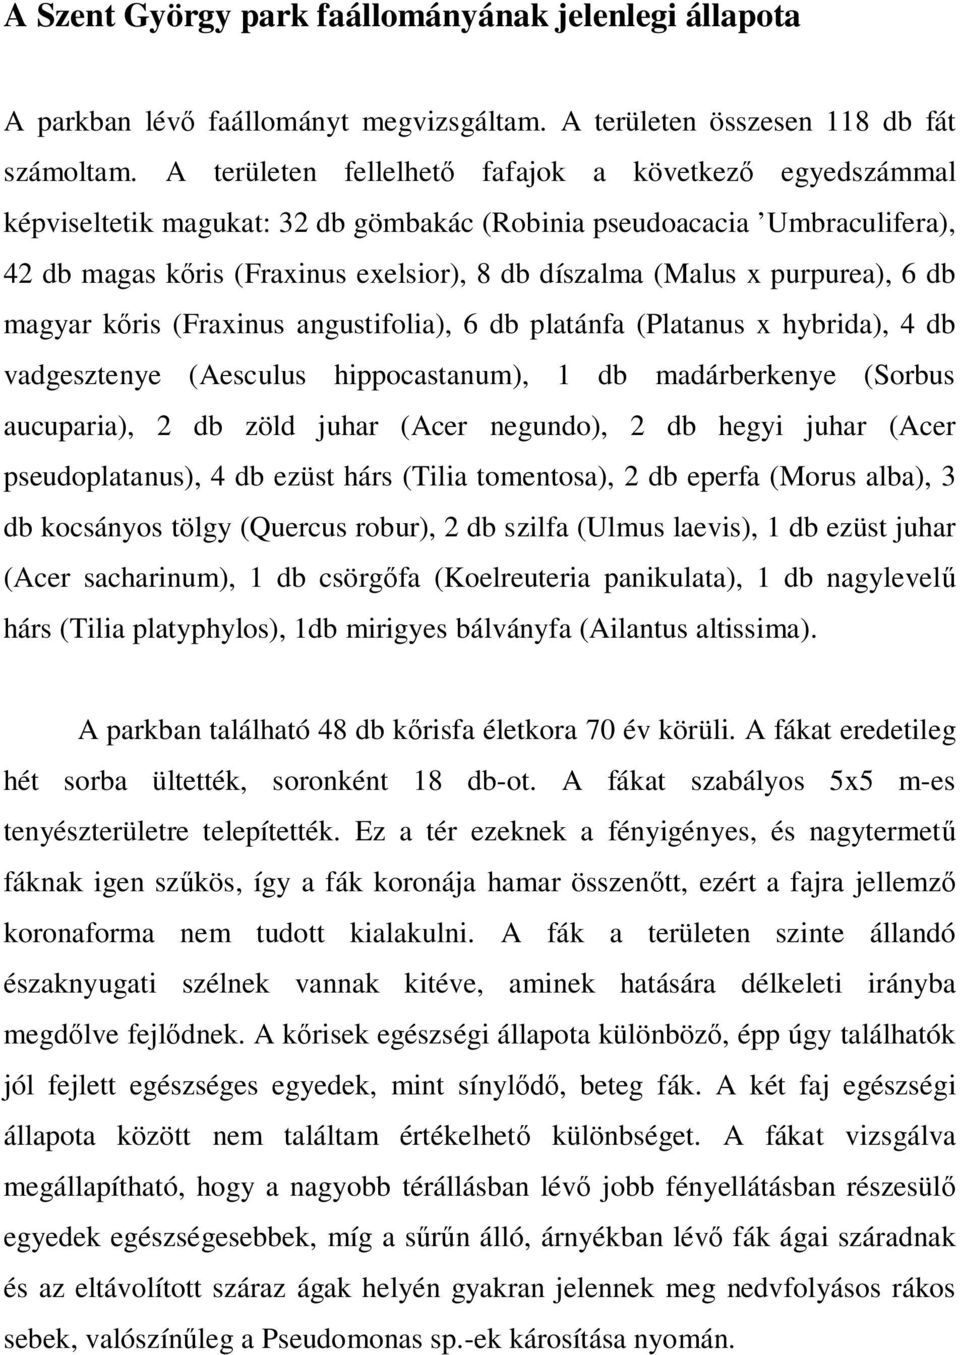 purpurea), 6 db magyar kőris (Fraxinus angustifolia), 6 db platánfa (Platanus x hybrida), 4 db vadgesztenye (Aesculus hippocastanum), 1 db madárberkenye (Sorbus aucuparia), 2 db zöld juhar (Acer